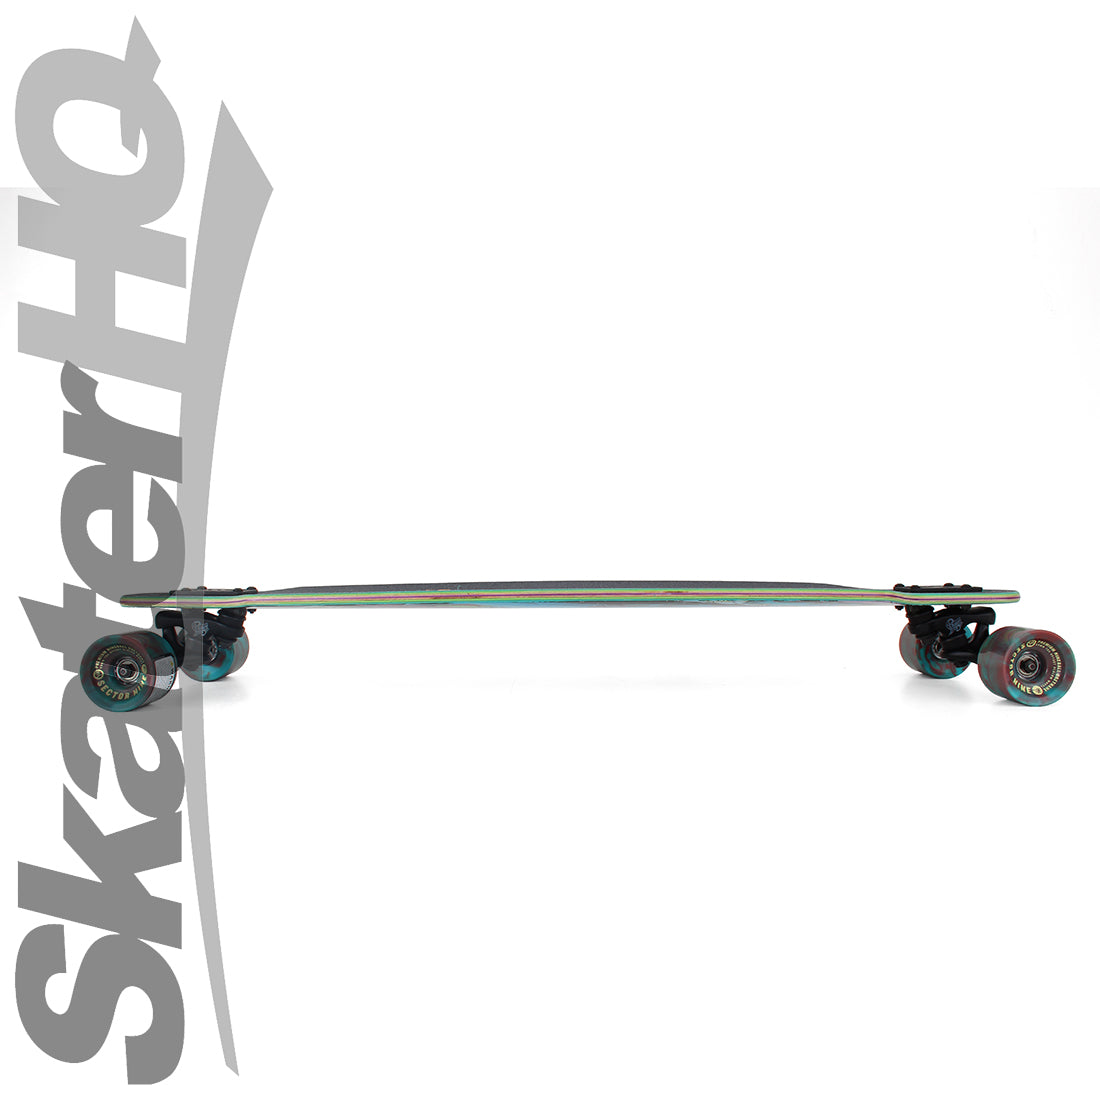 Sector 9 Fractal Battle 36 Complete - Neon Skateboard Completes Longboards